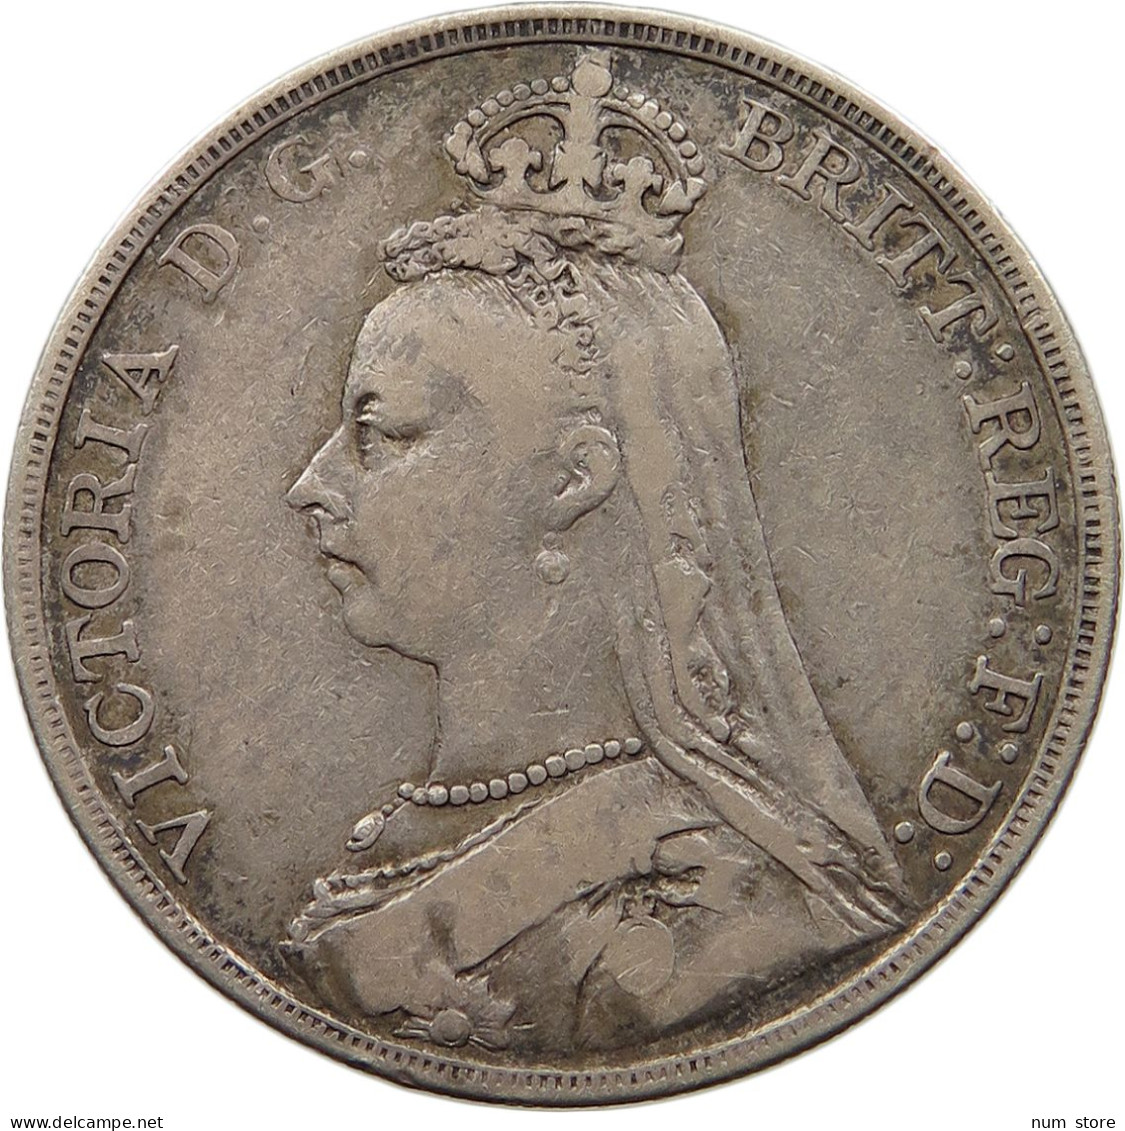 GREAT BRITAIN CROWN 1889 Victoria 1837-1901 #t082 0231 - M. 1 Crown